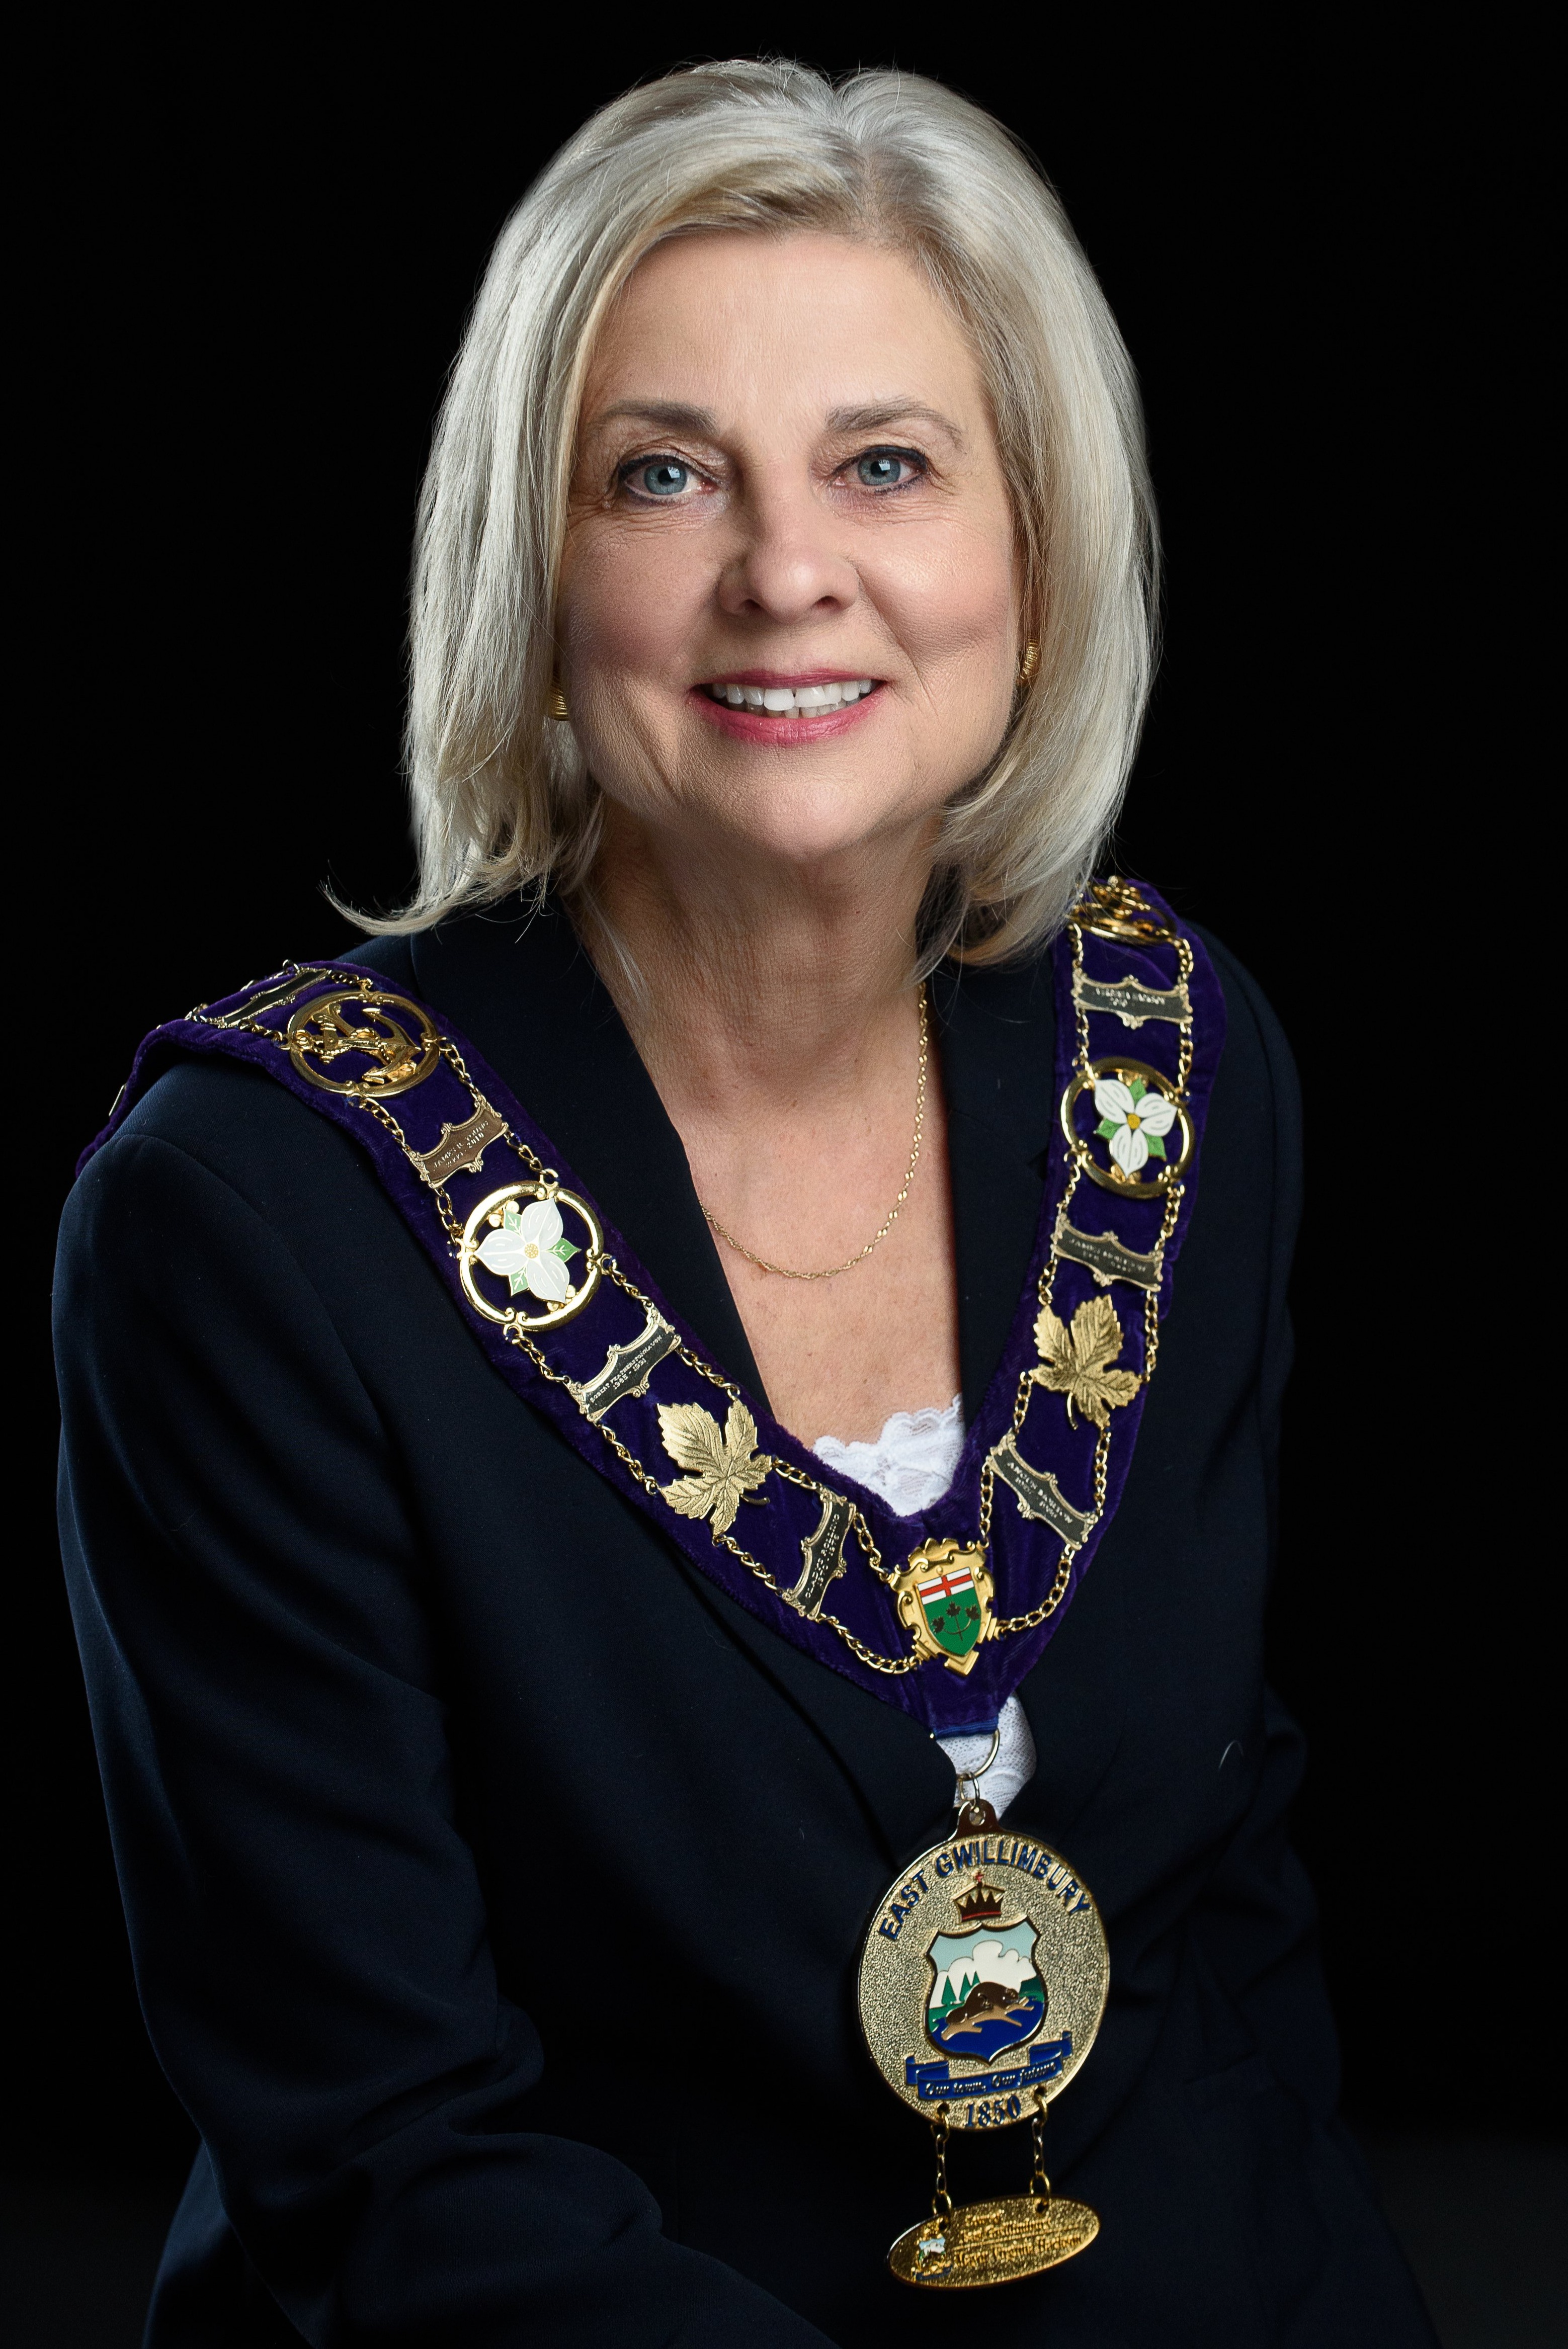 Mayor Virginia Hackson